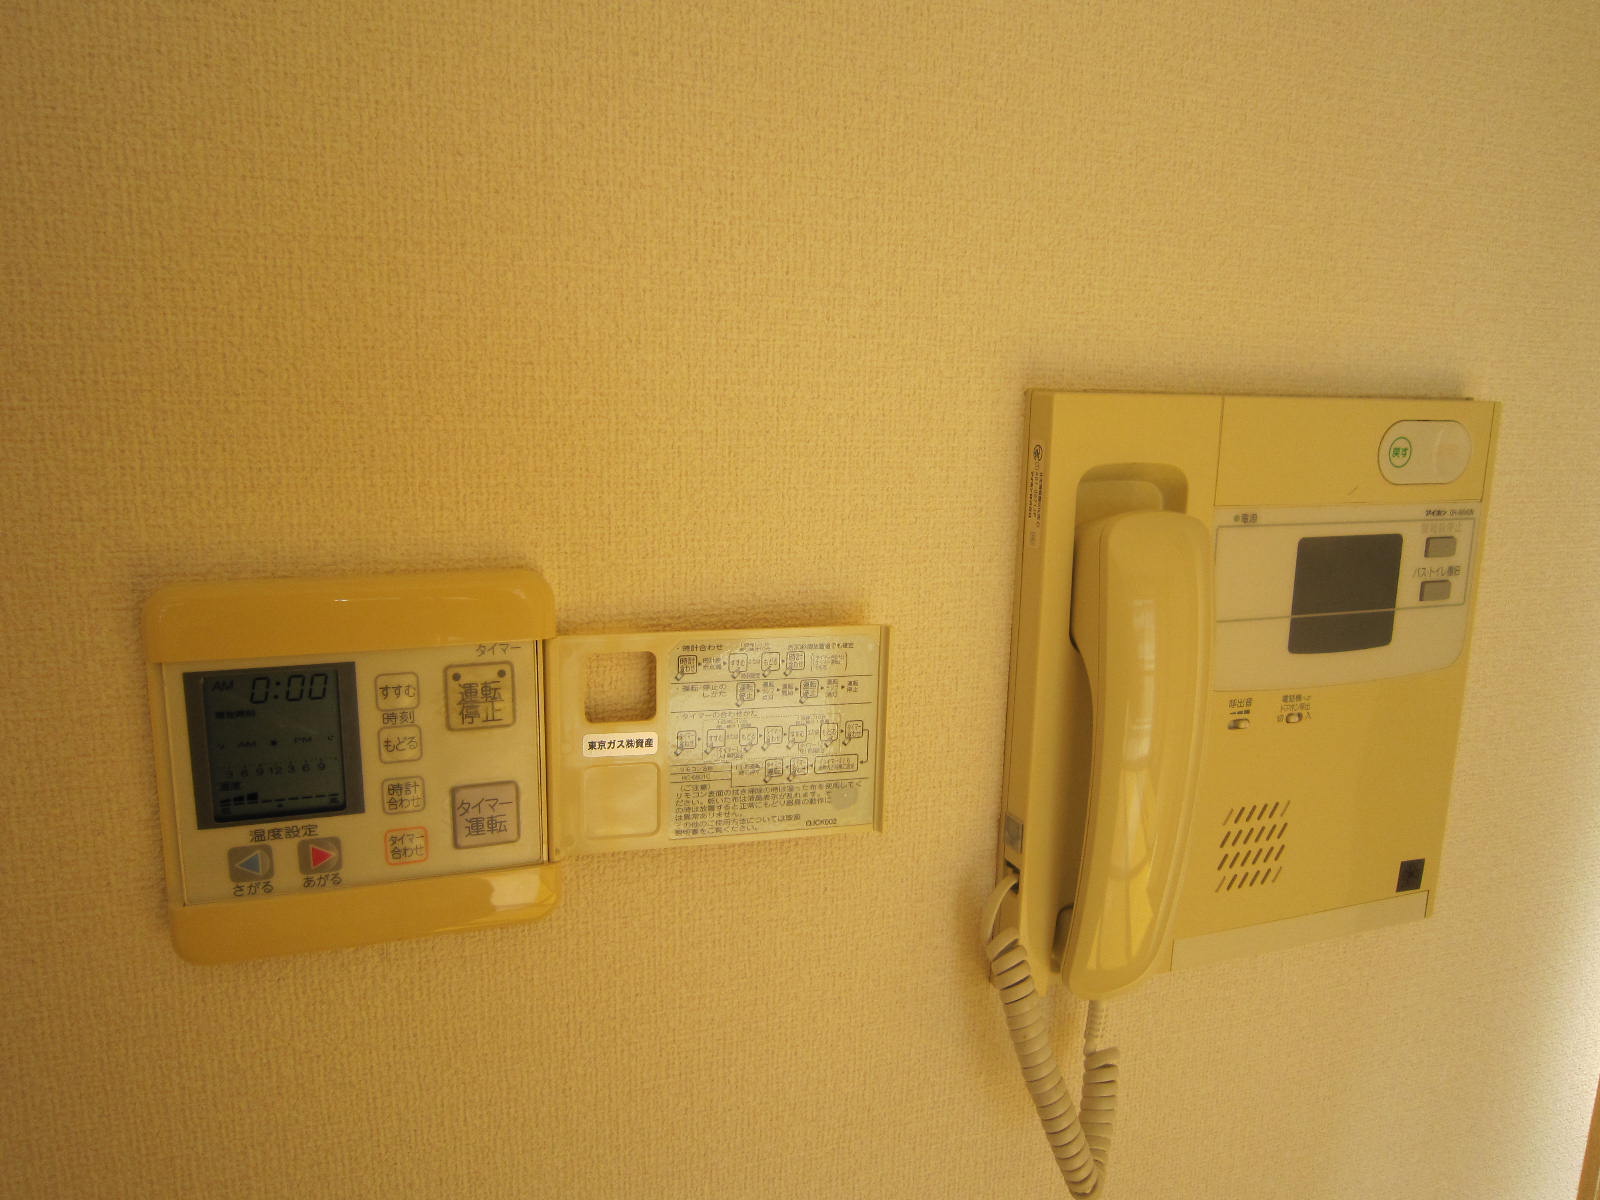 Security. Intercom and floor heating operation panel